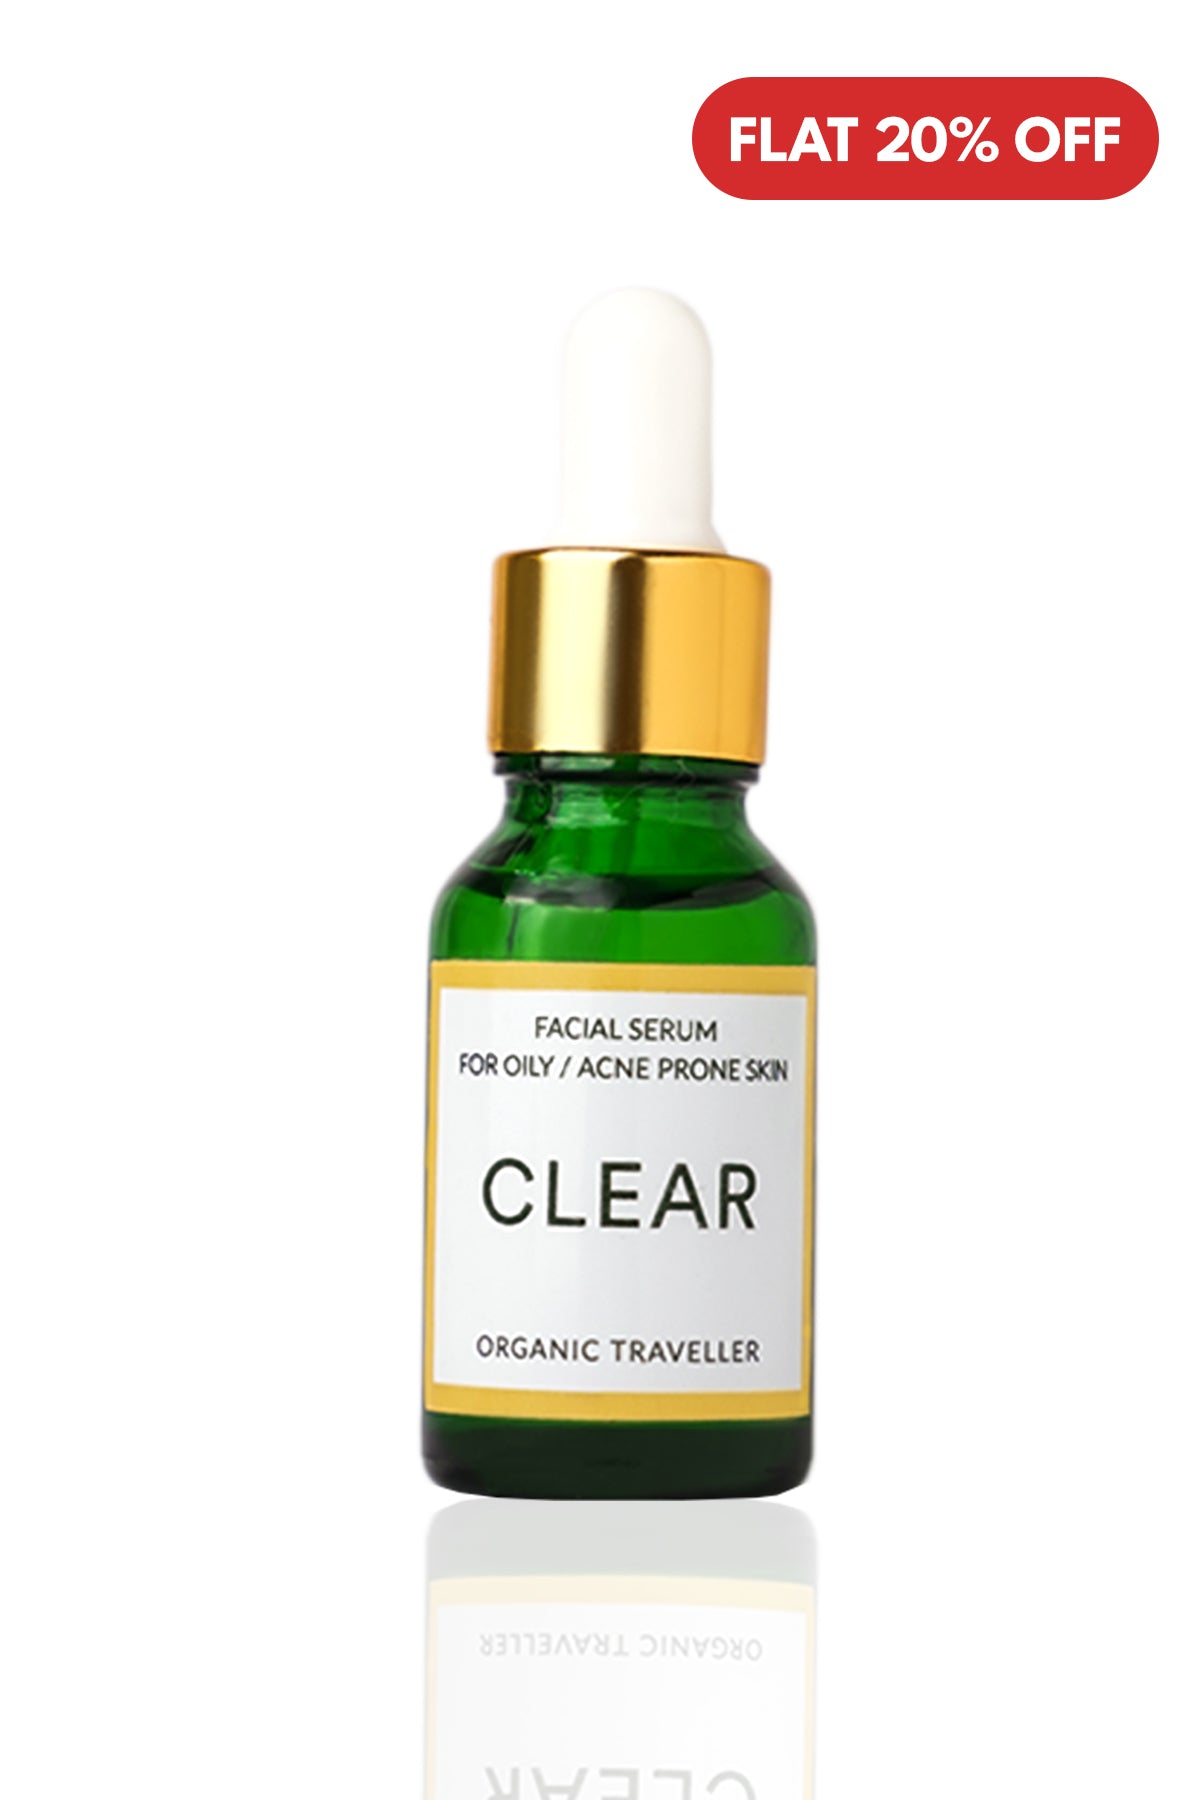 Clear: Acne clearing serum